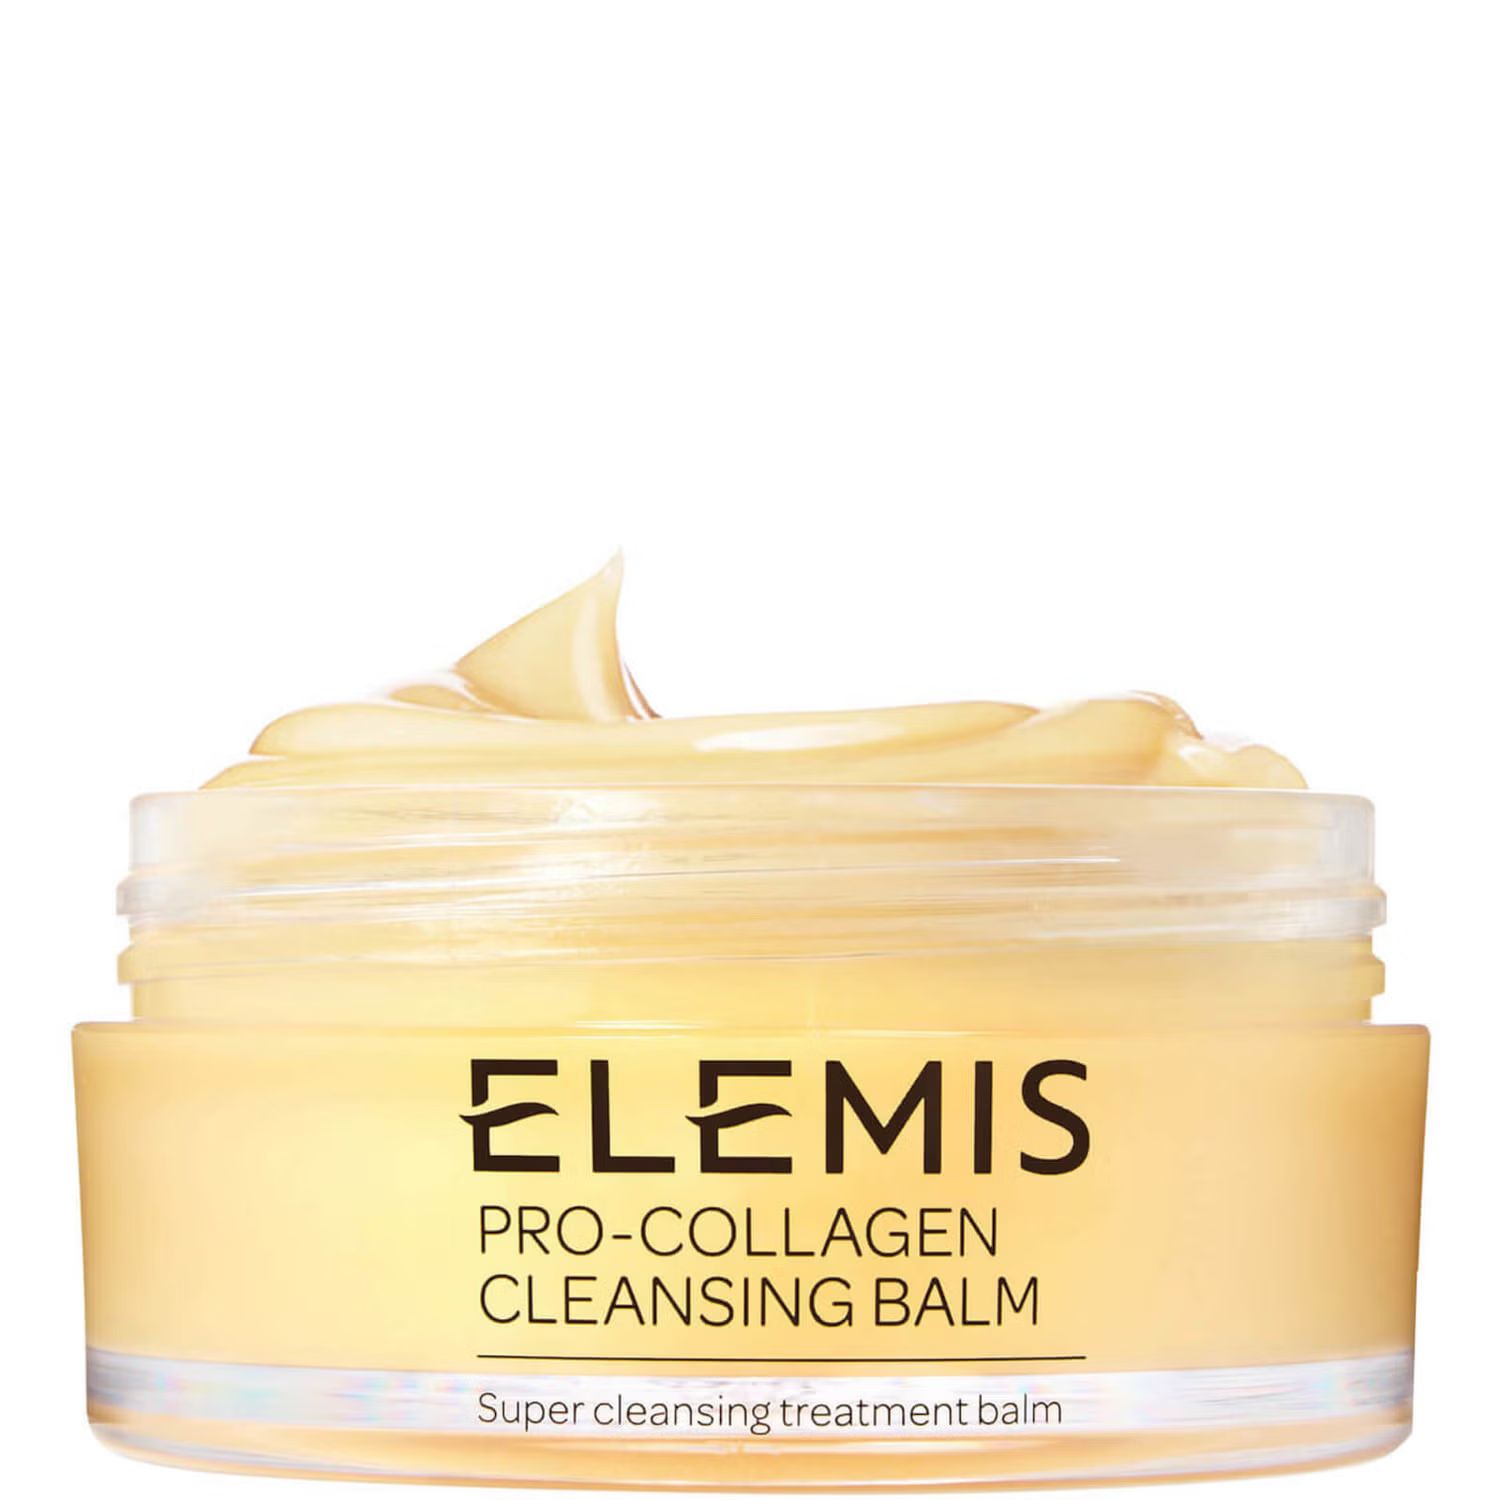 ELEMIS Pro-Collagen Cleansing Balm 100g | Cult Beauty